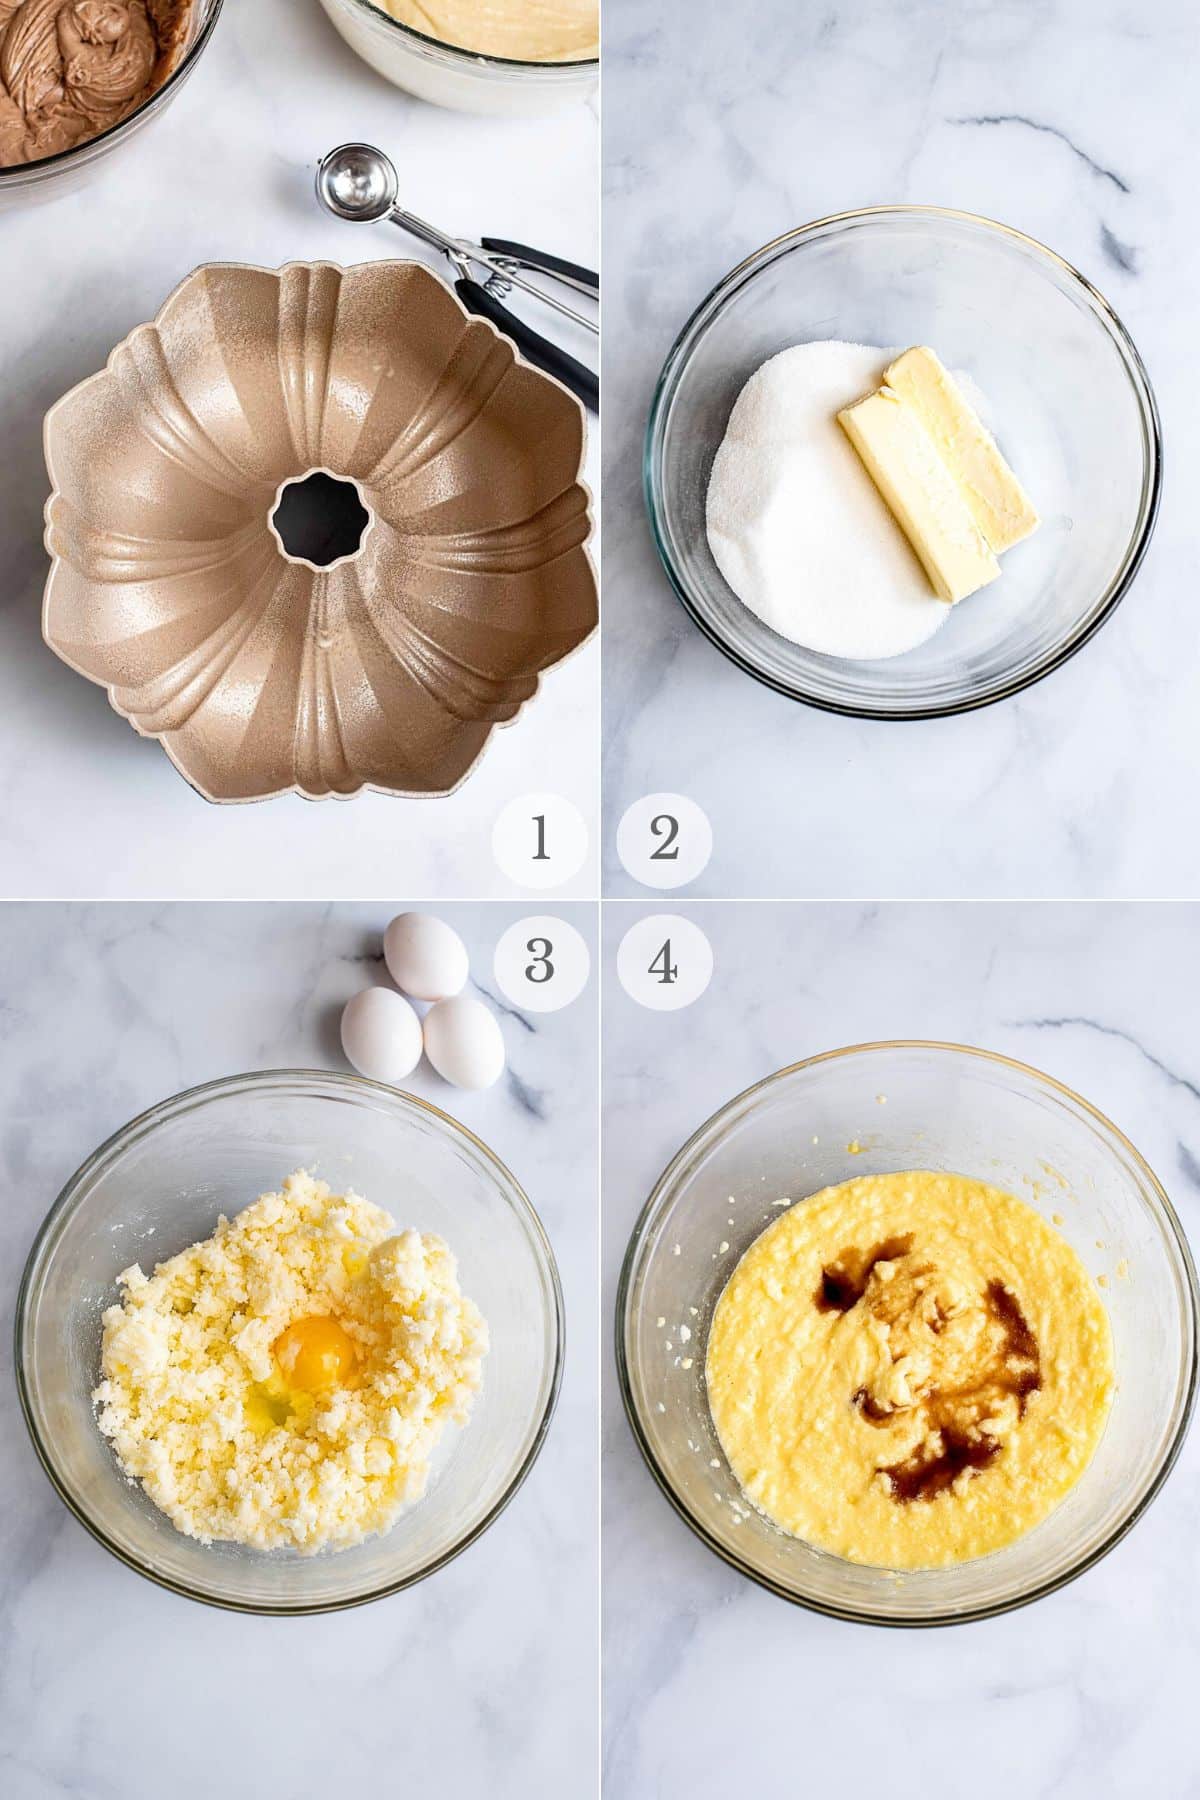 marble cake recipe steps 1-4.